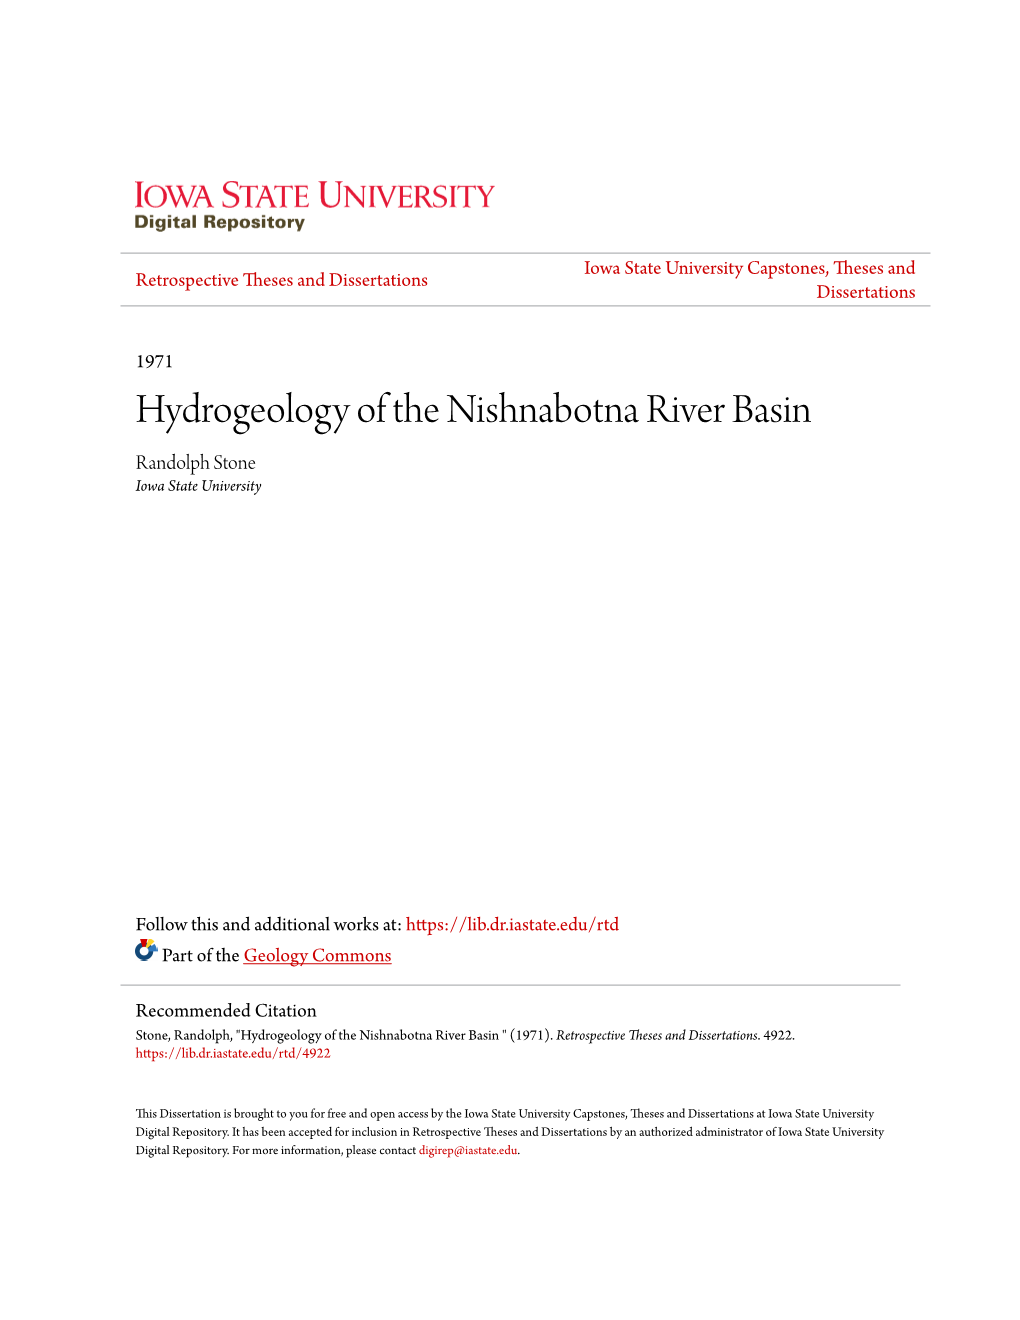 Hydrogeology of the Nishnabotna River Basin Randolph Stone Iowa State University